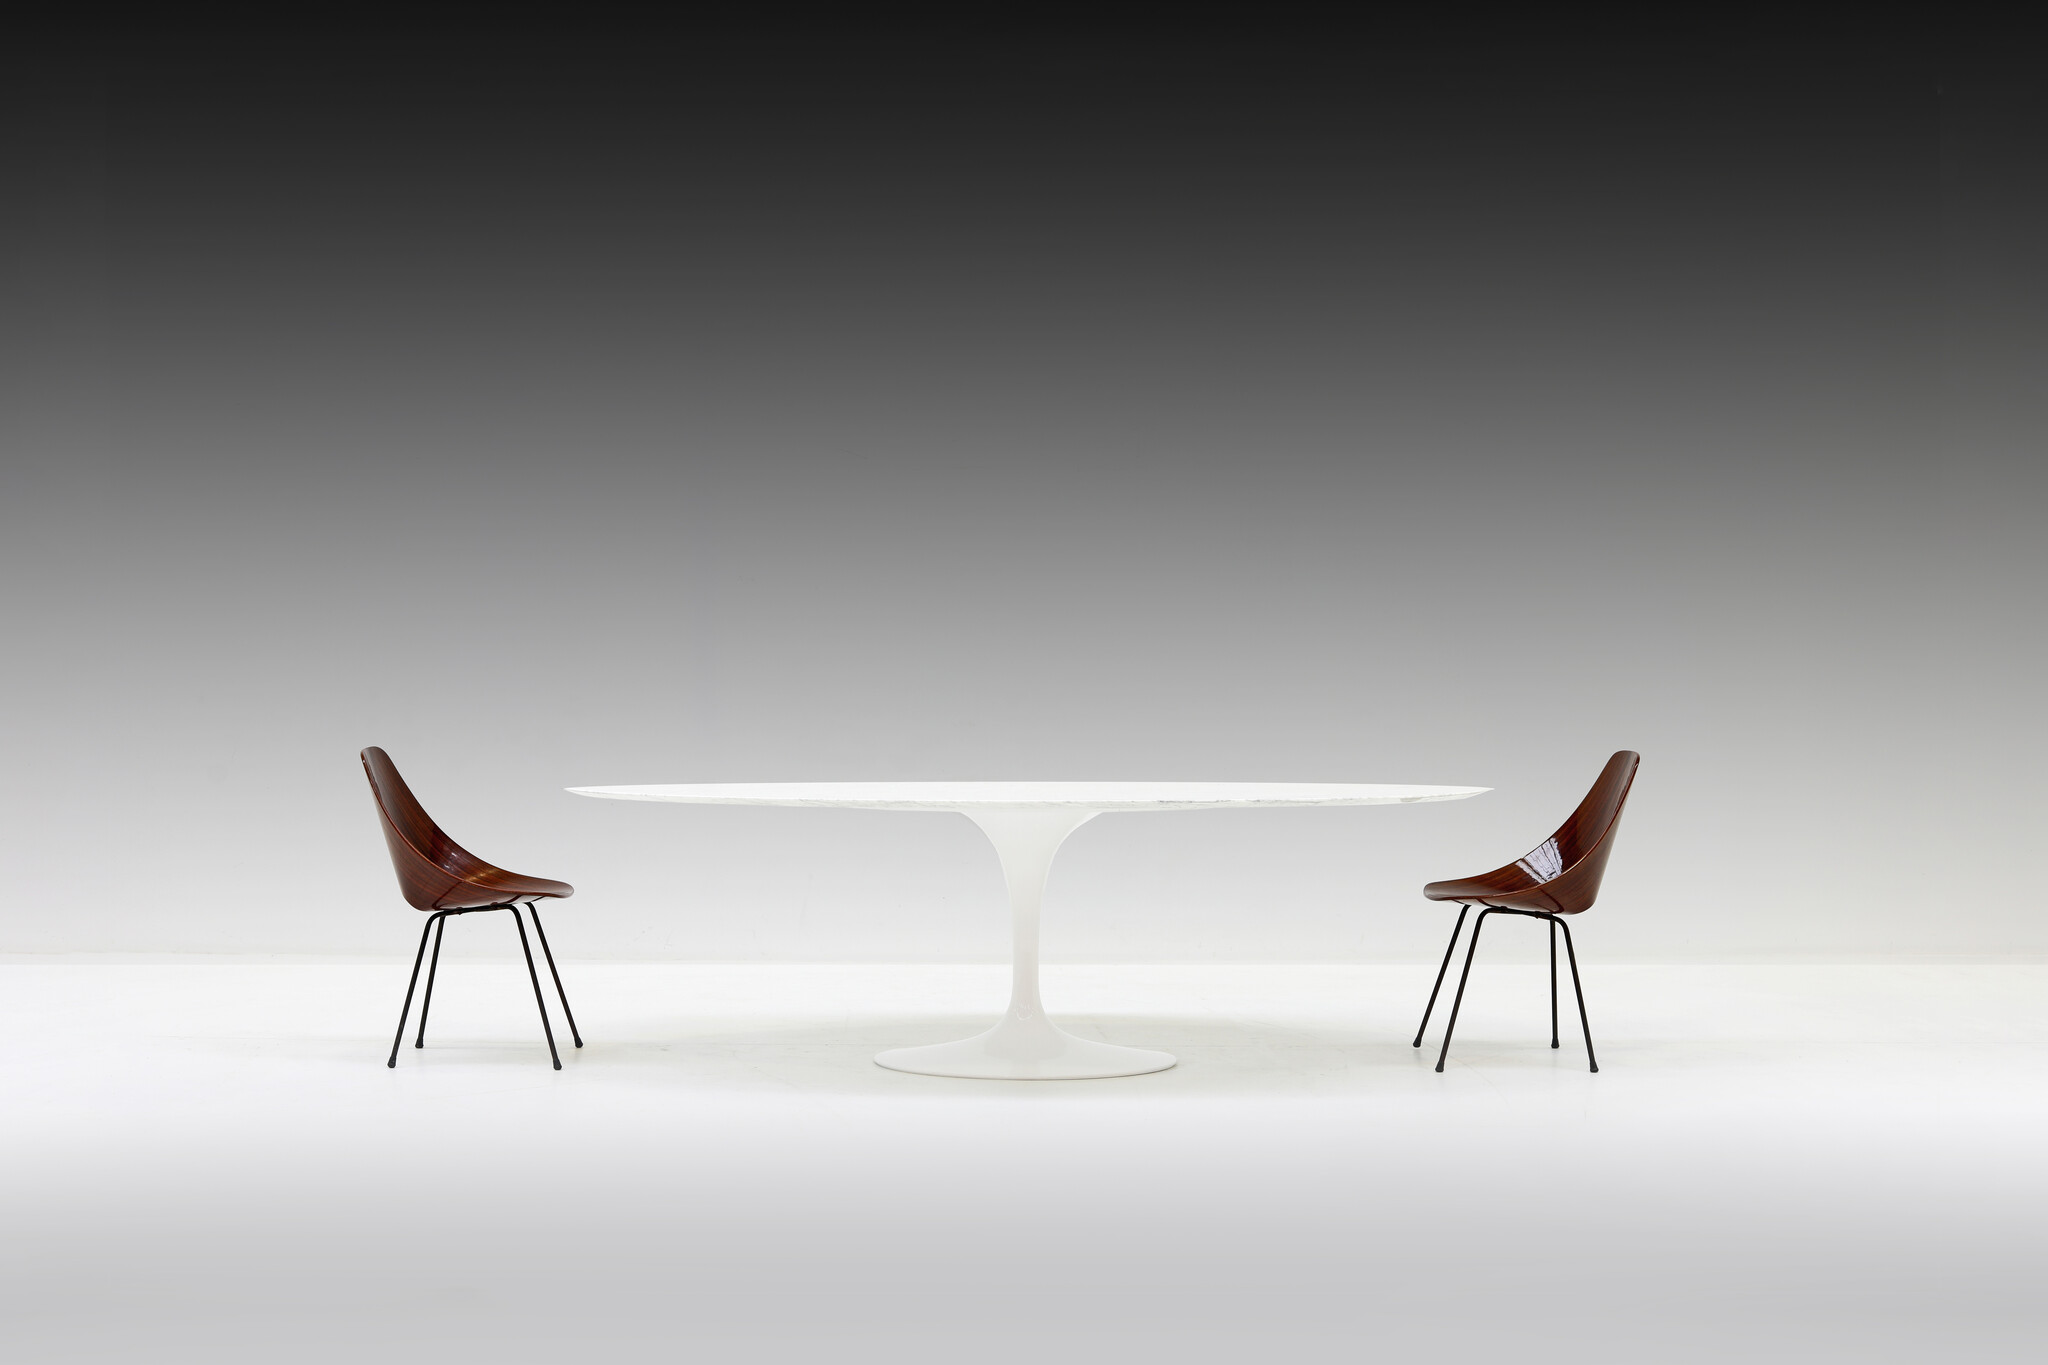 Marble Knoll Tulip oval table designed by Eero Saarinen